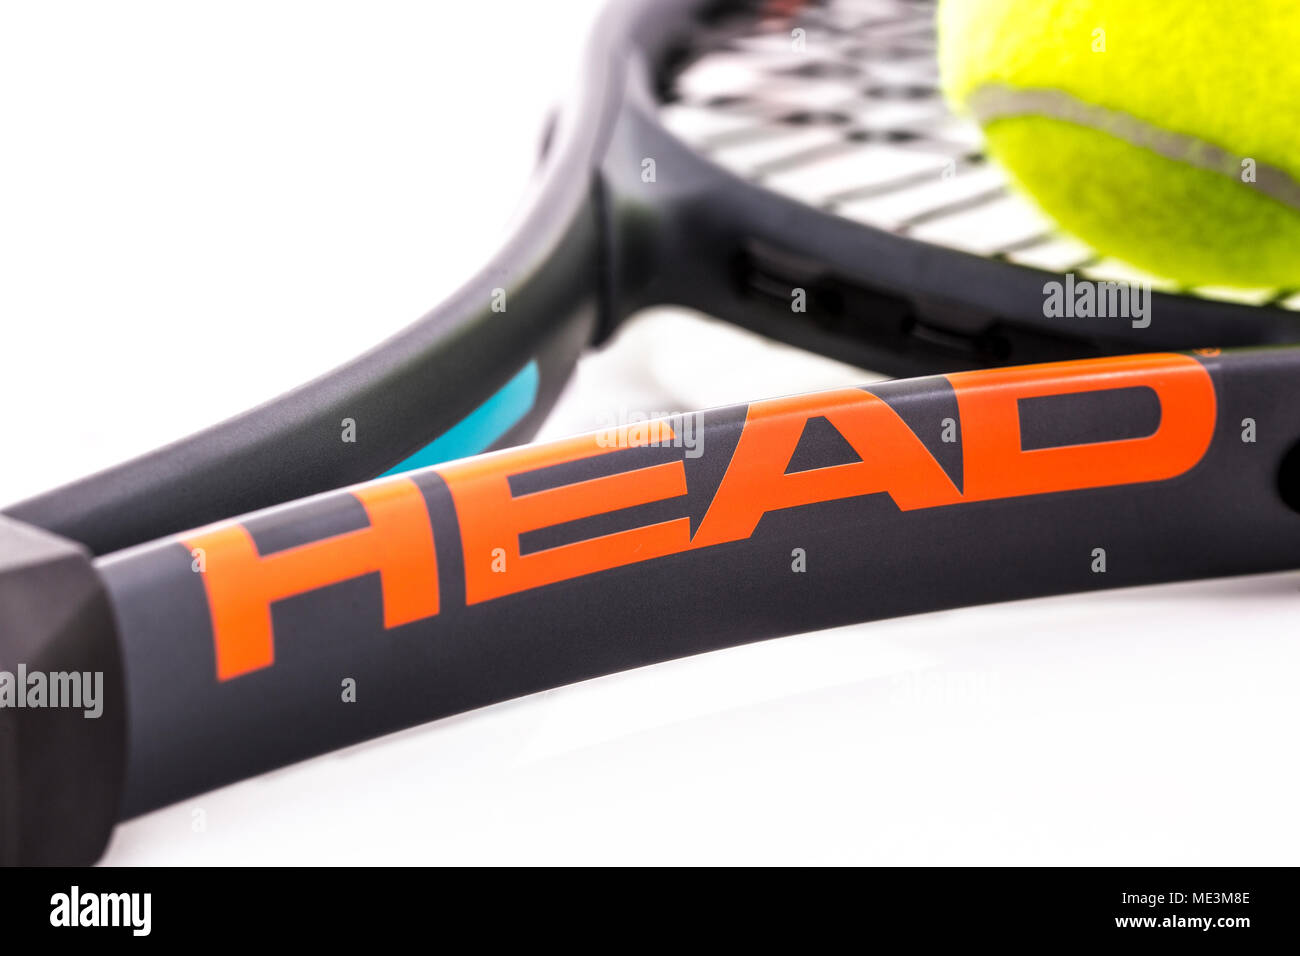 SWINDON, UK - APRIL 15, 2018: Head Tennis Racket and Slazenger Ball on a white background Stock Photo